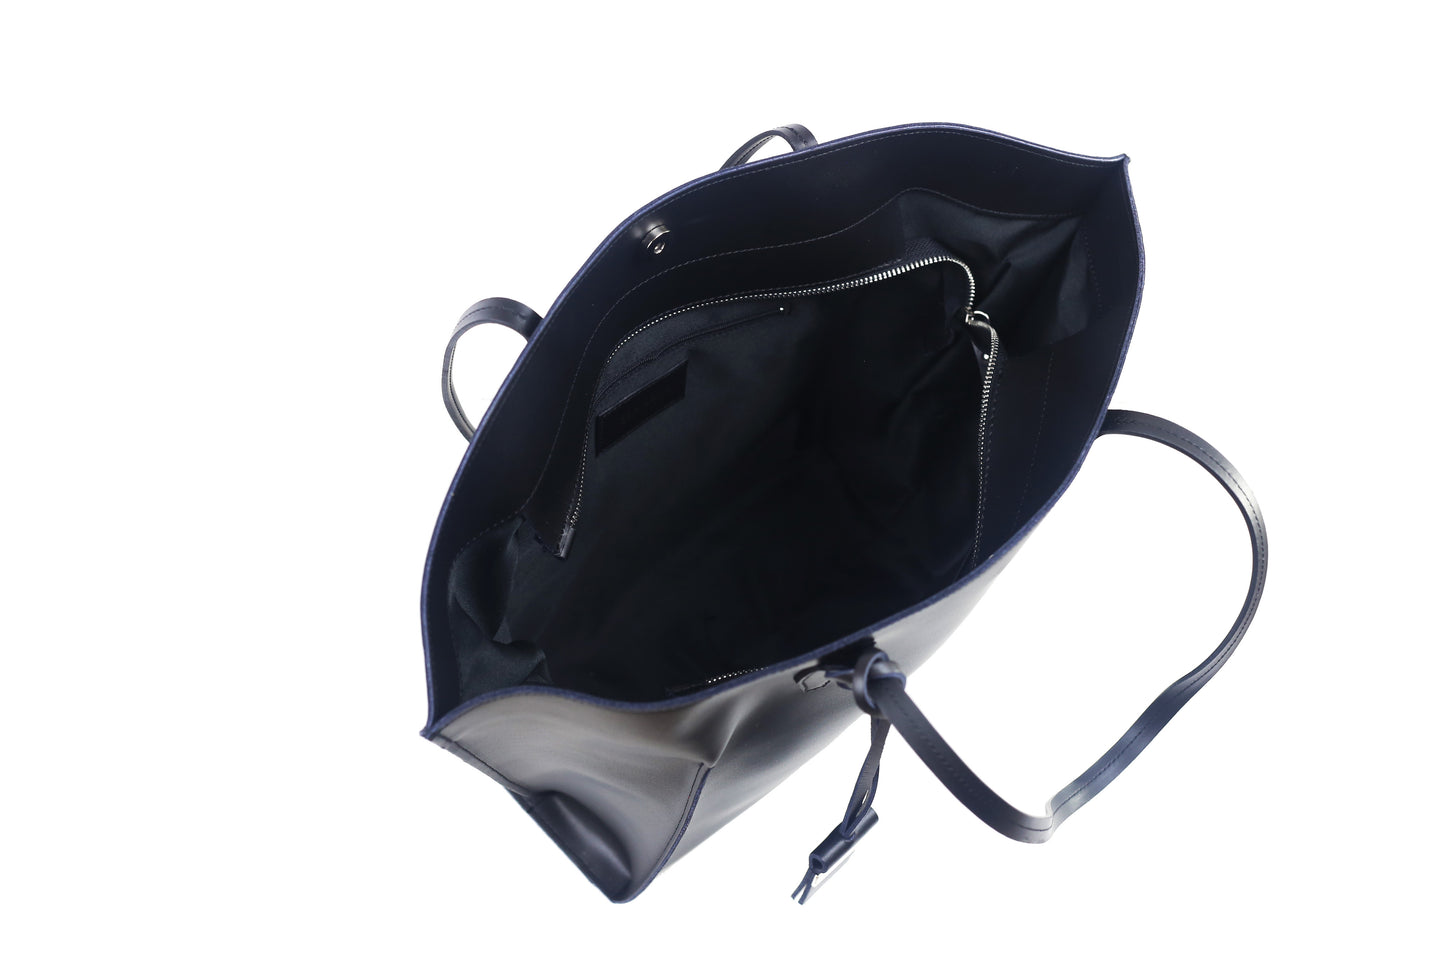 Serafina black wing leather shopper bag - ELEARIA